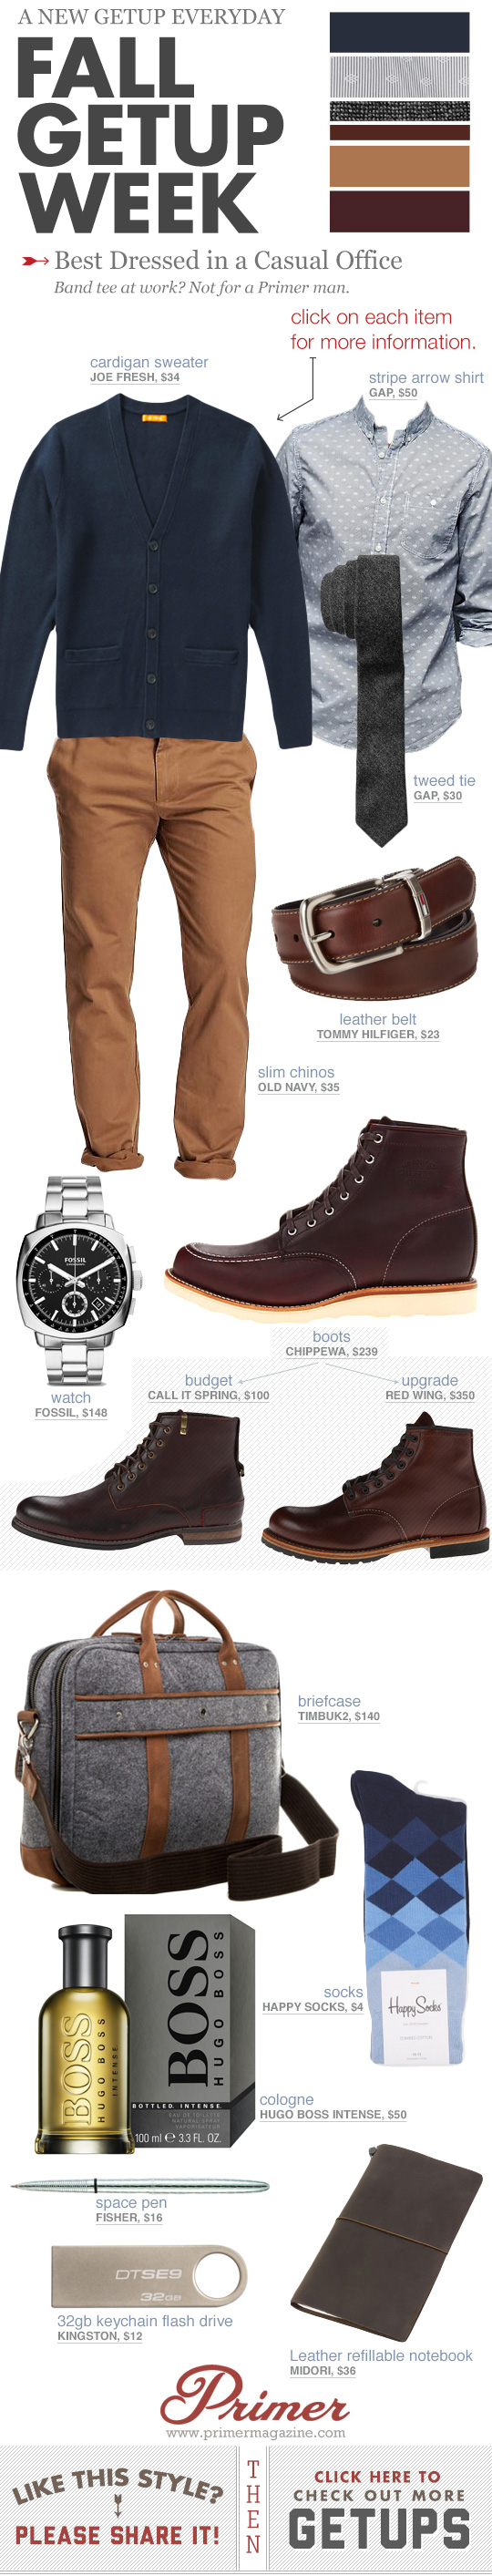 Casual Office Fall Getup Week - Cardigan, dress shirt, khaki pants, moc toe boots